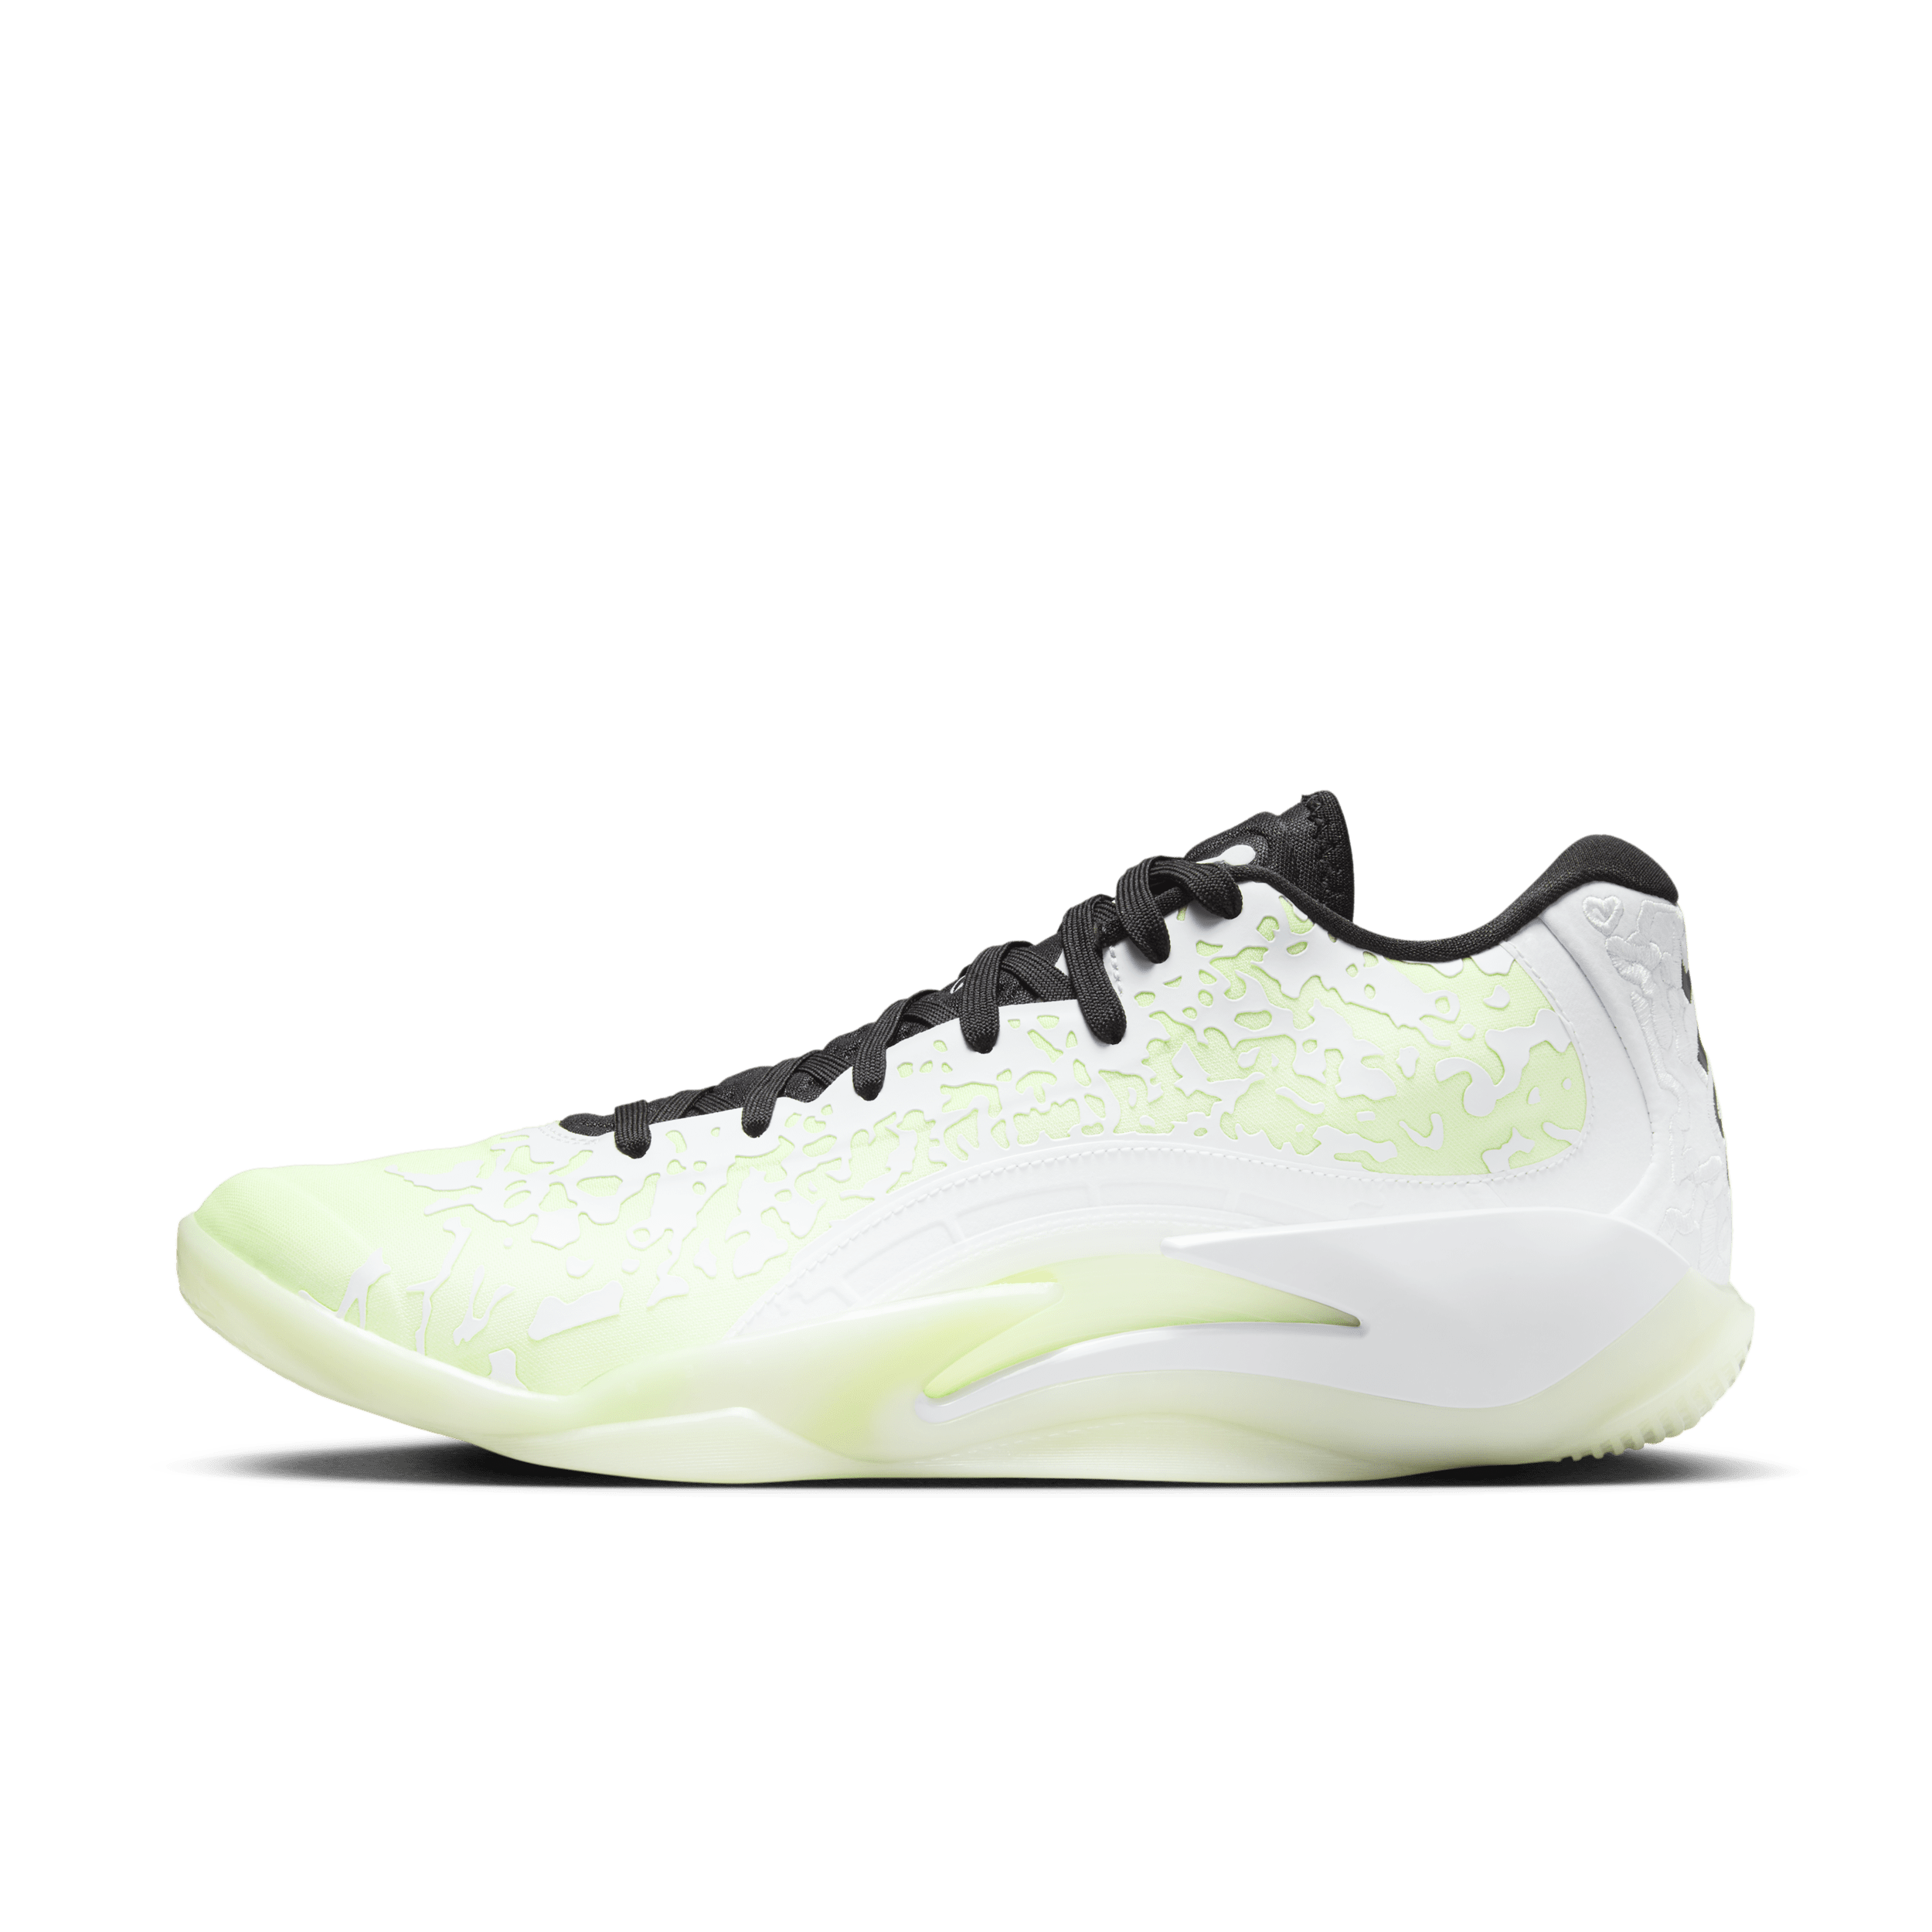 Nike Zion 3-basketballsko - hvid